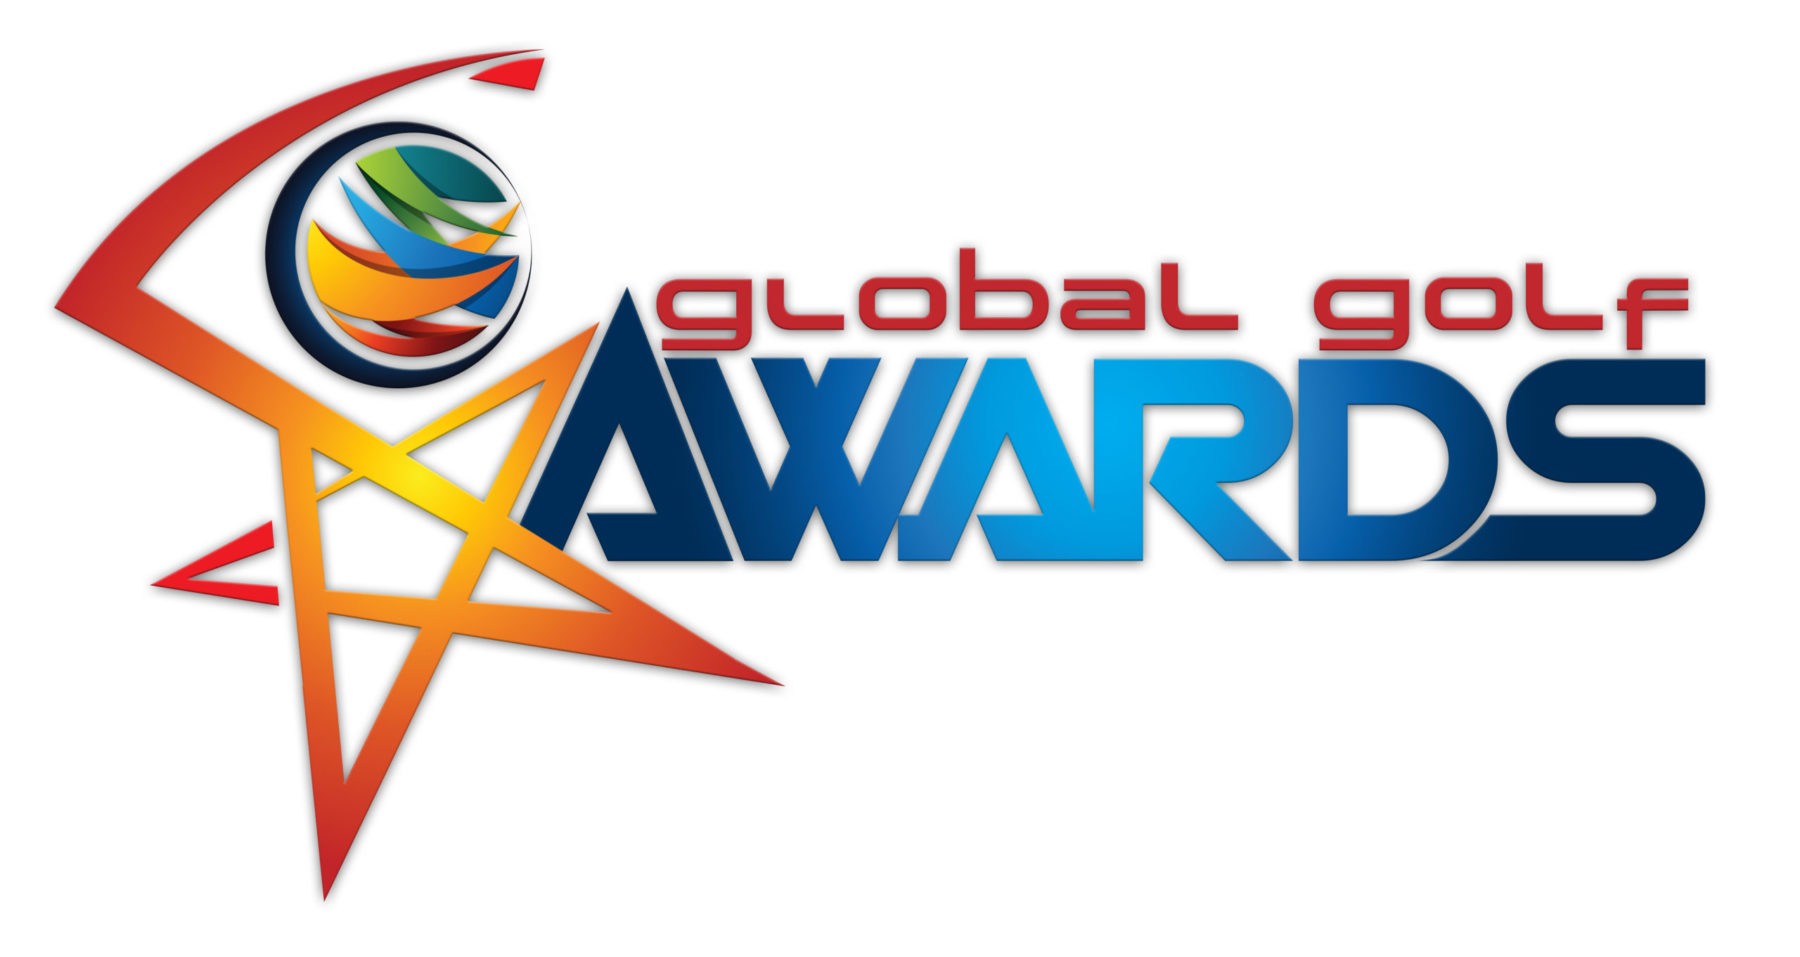 Global Golf Awards2020